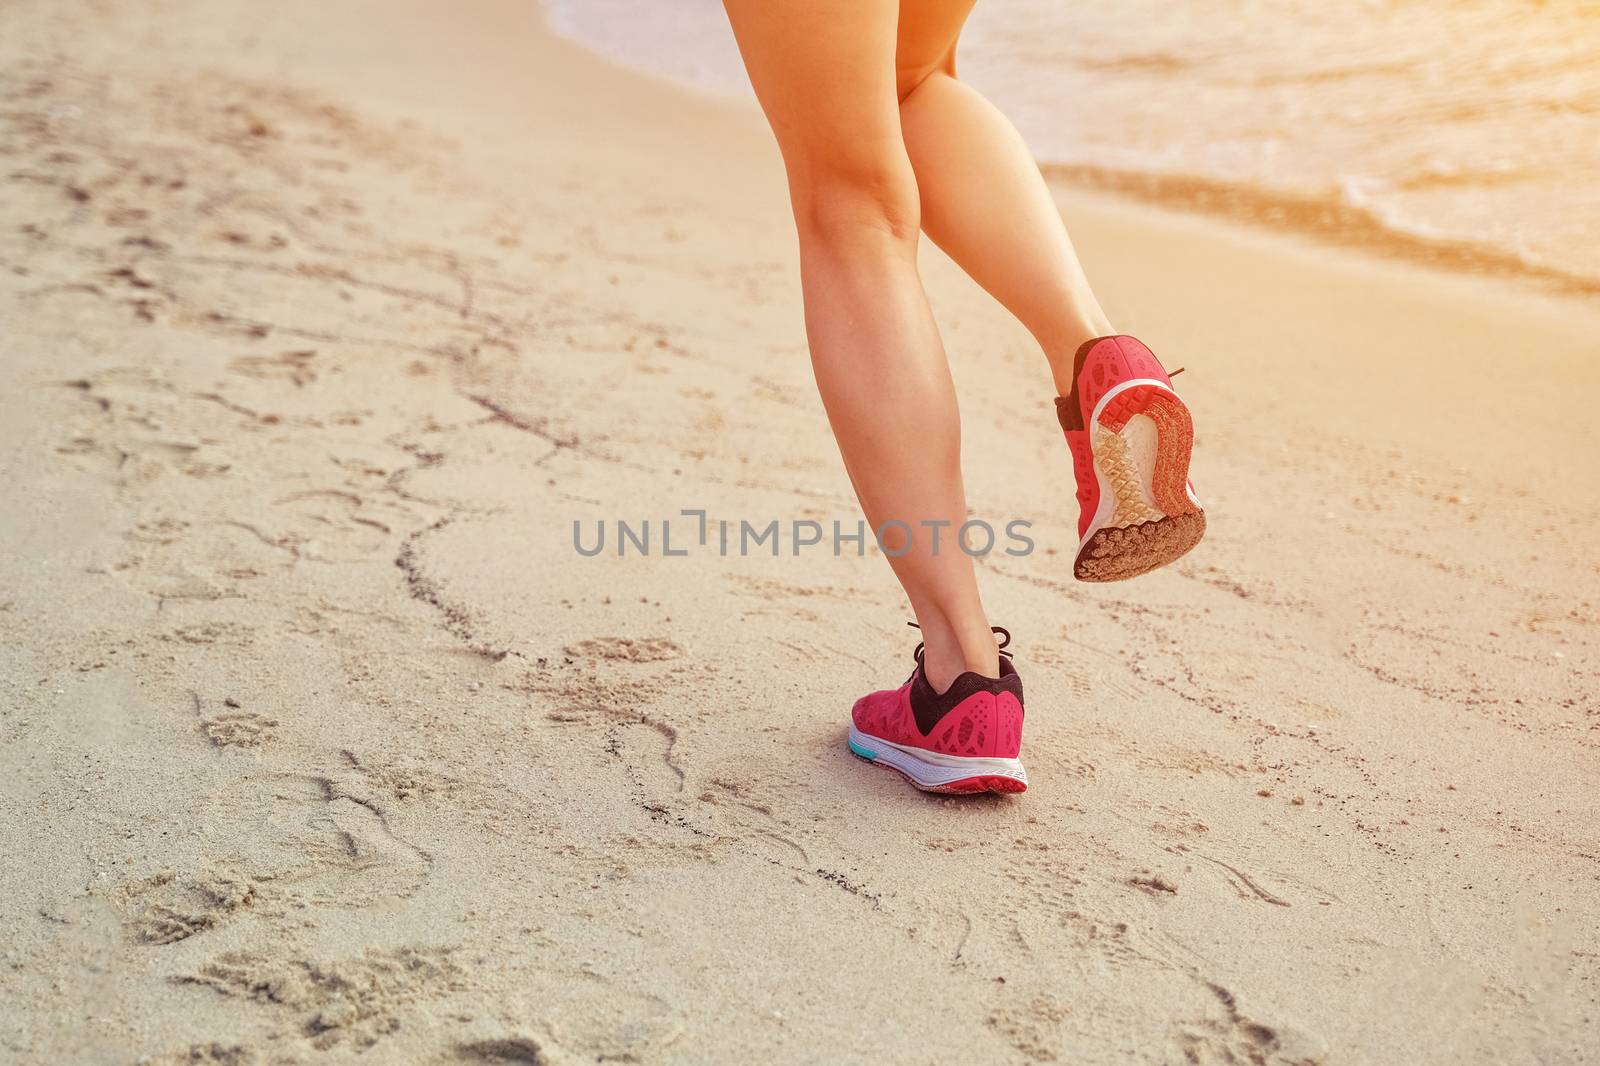 Runner woman running on beach in sunrise by Surasak